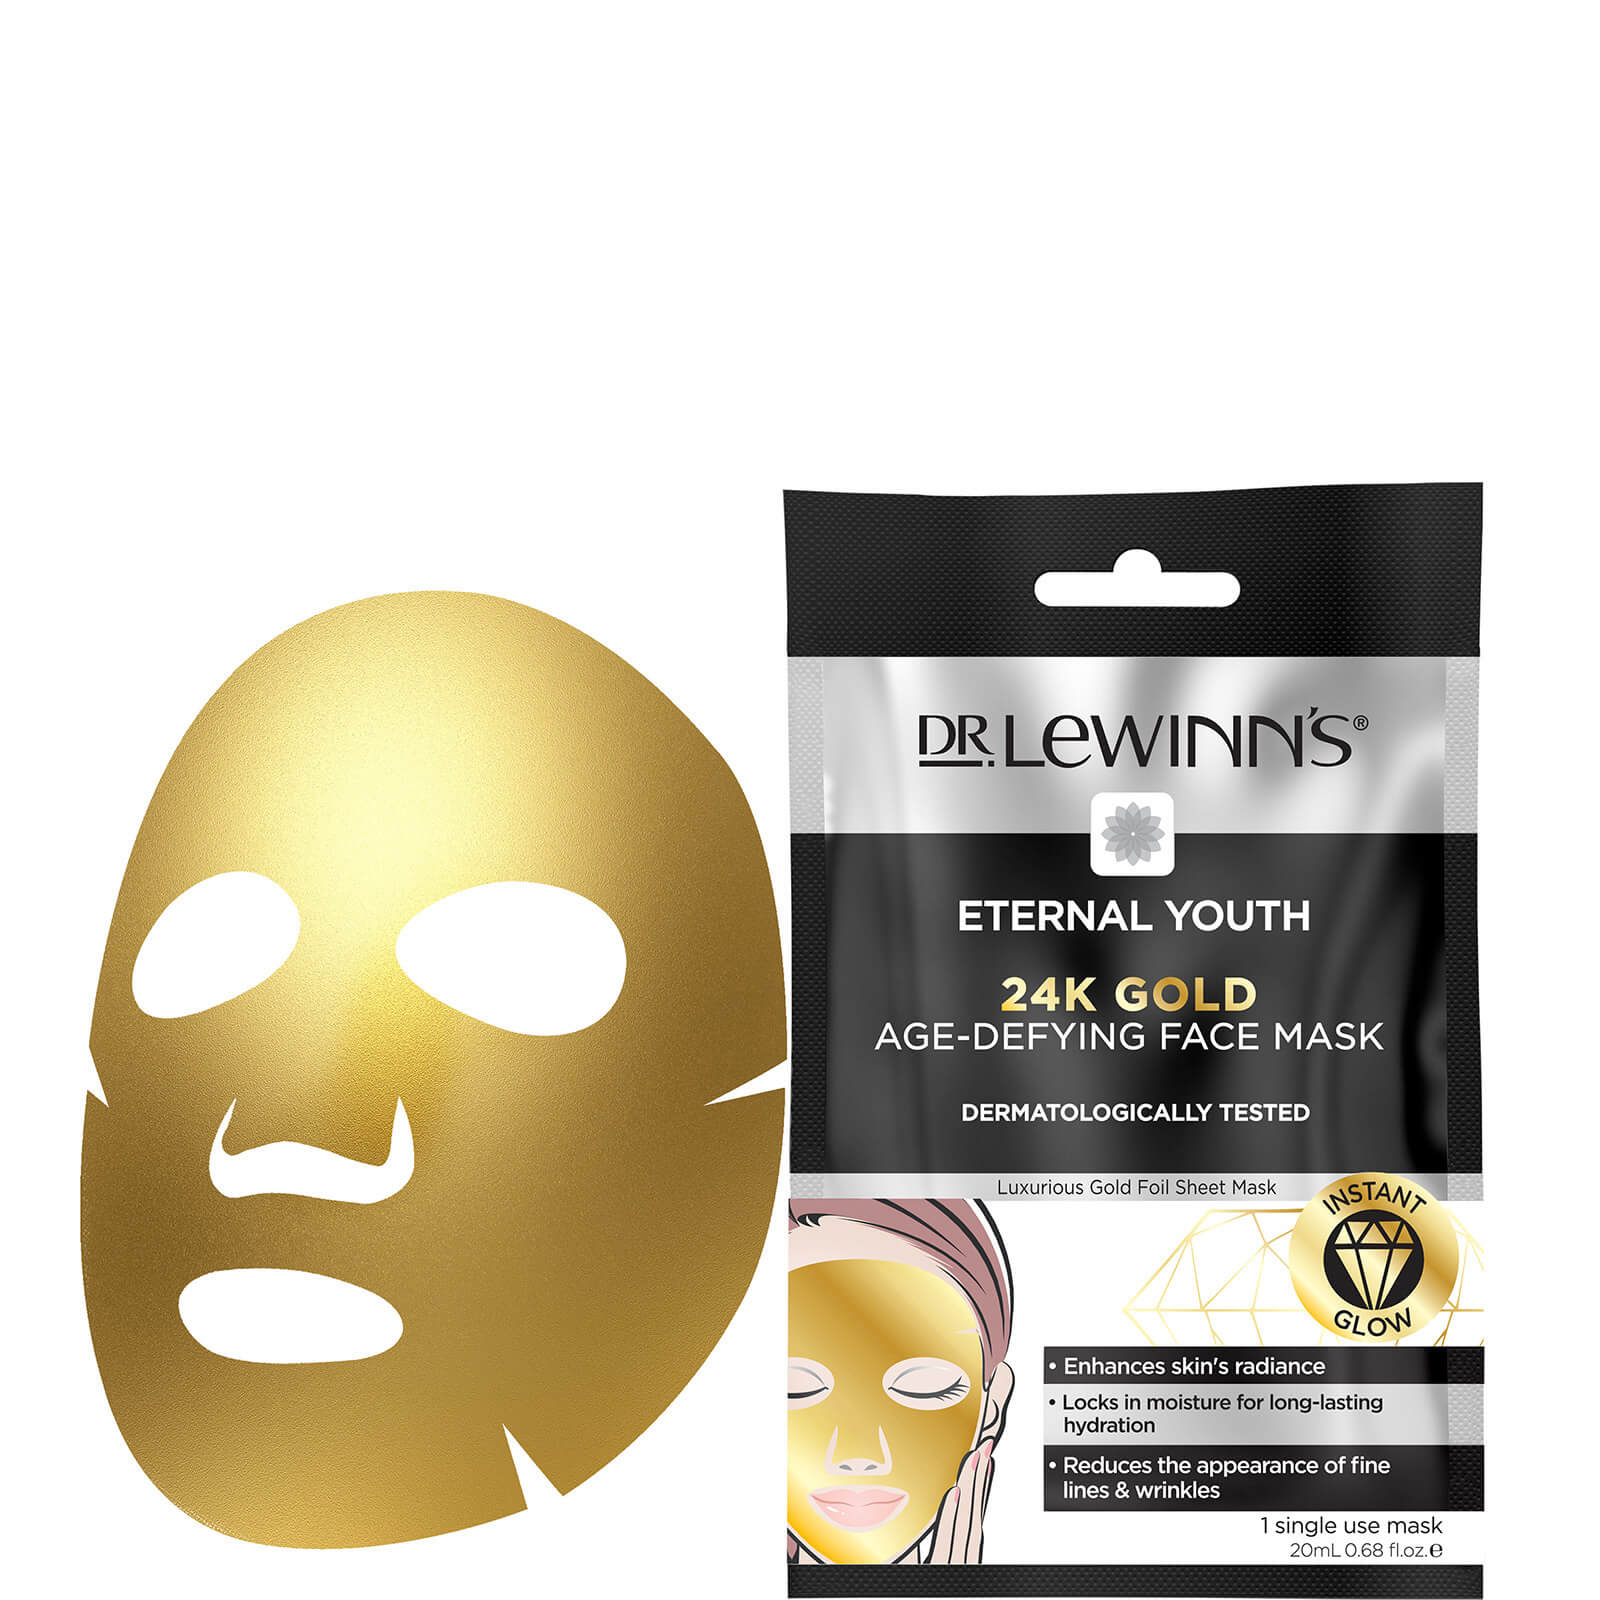 Dr. LeWinn's Eternal Youth 24K Gold Age-Defying Face Mask